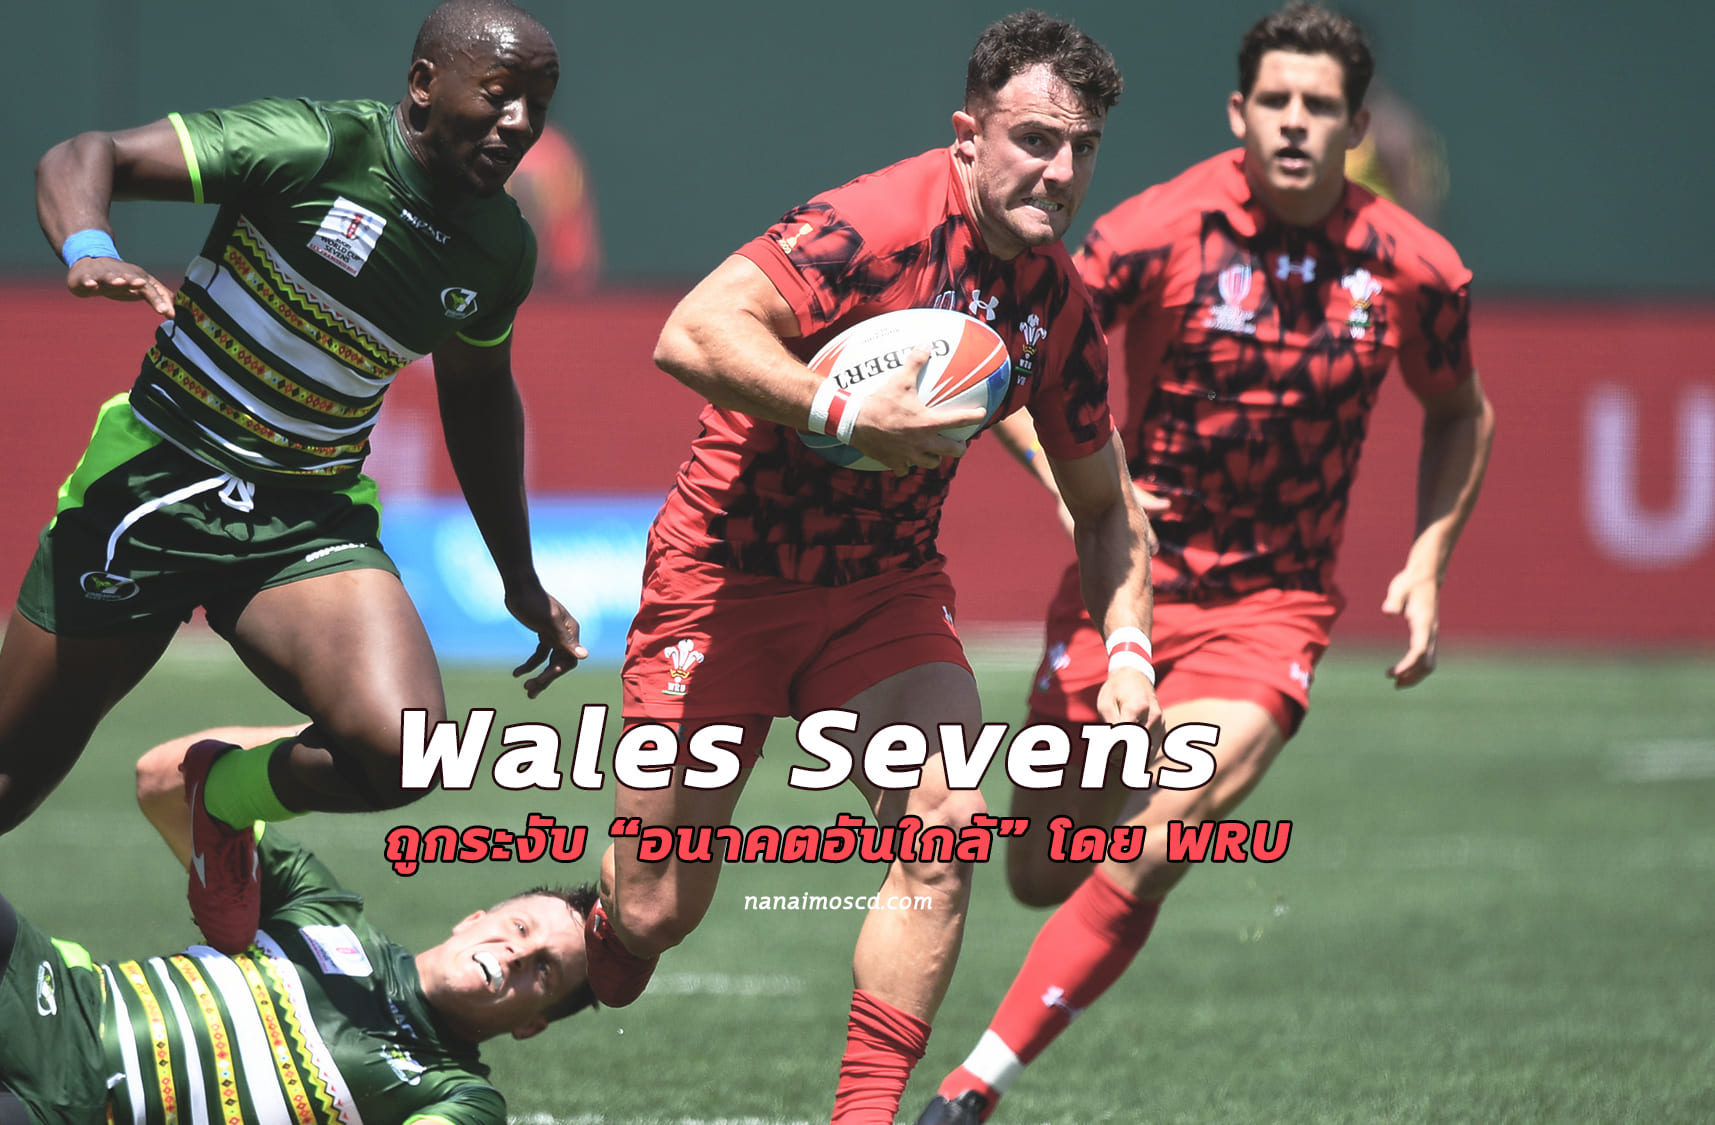 Wales Sevens